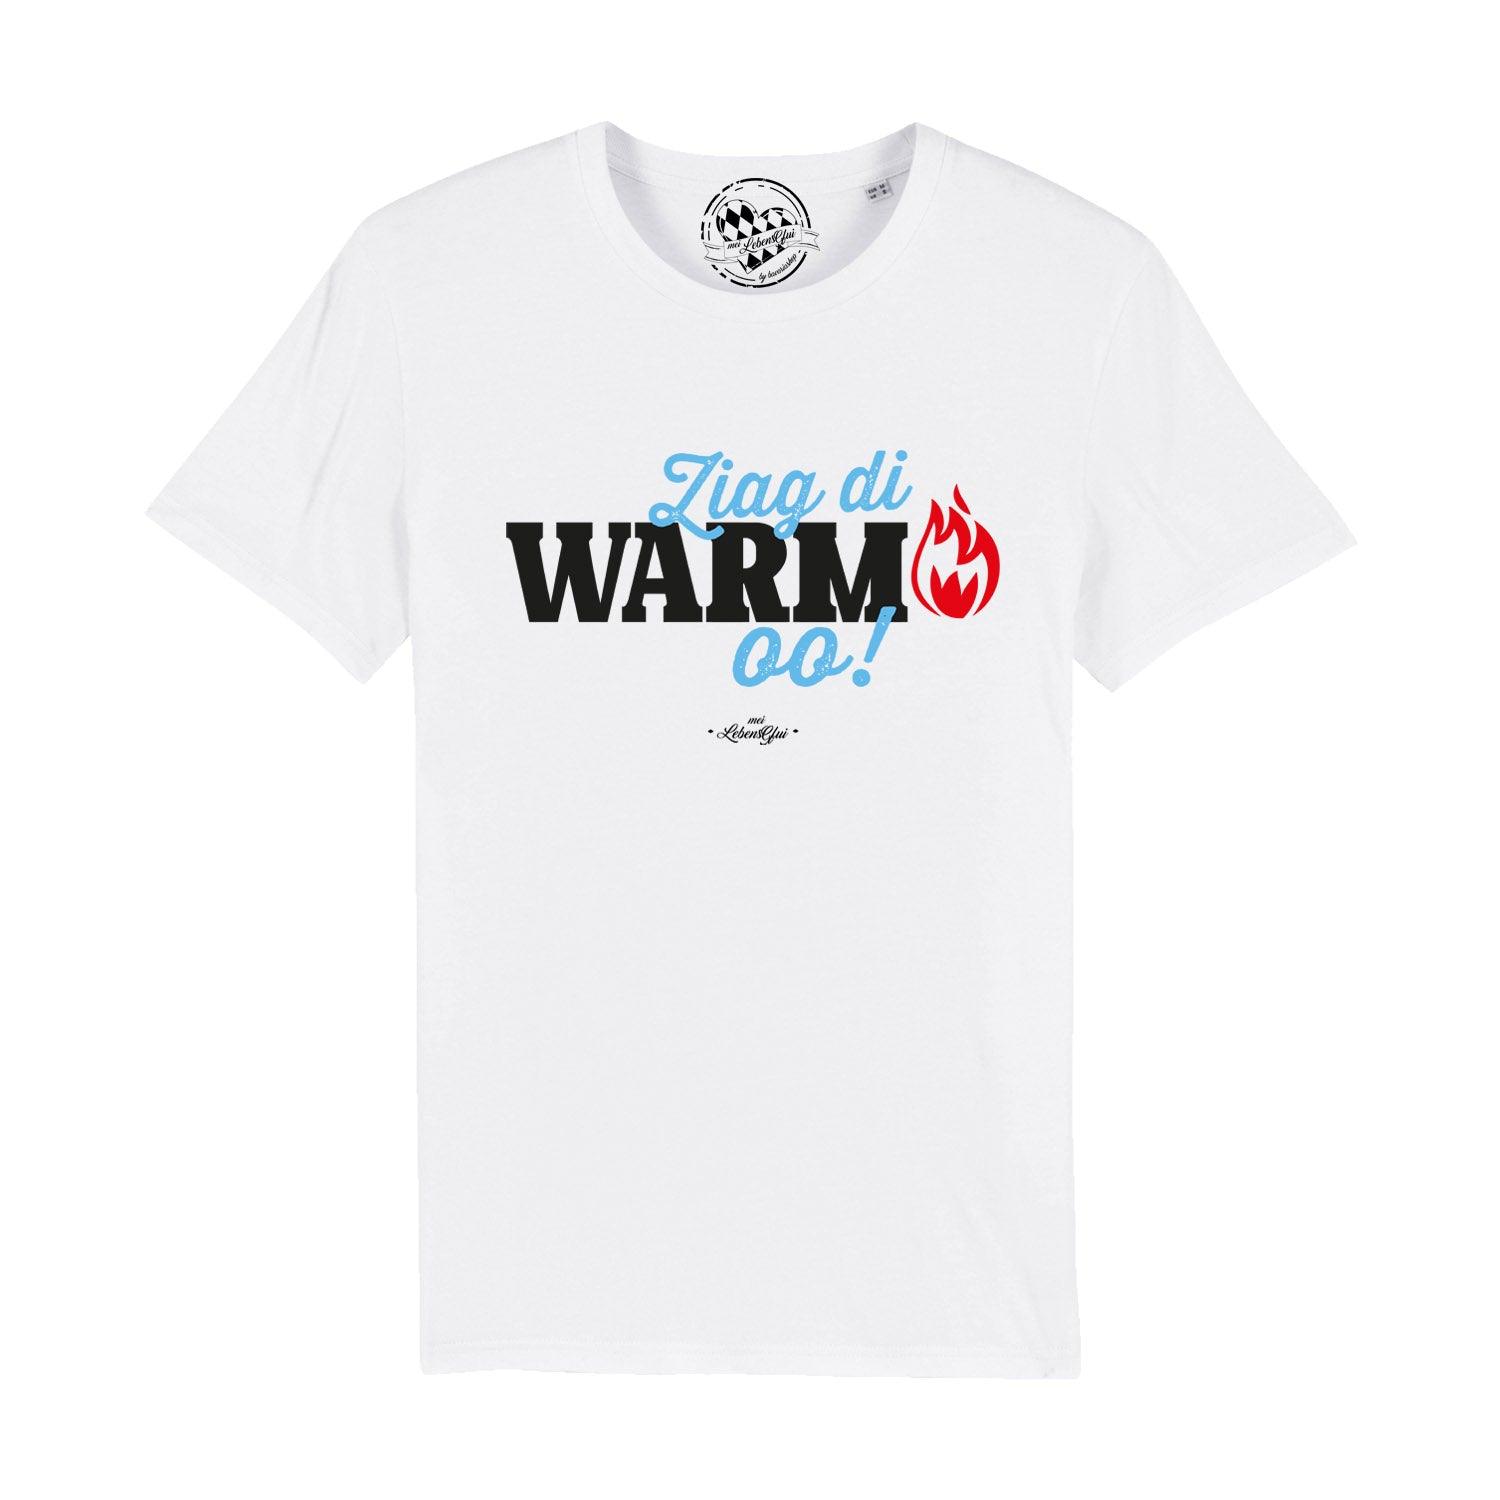 Herren T-Shirt "Ziag di warm oo!" - bavariashop - mei LebensGfui